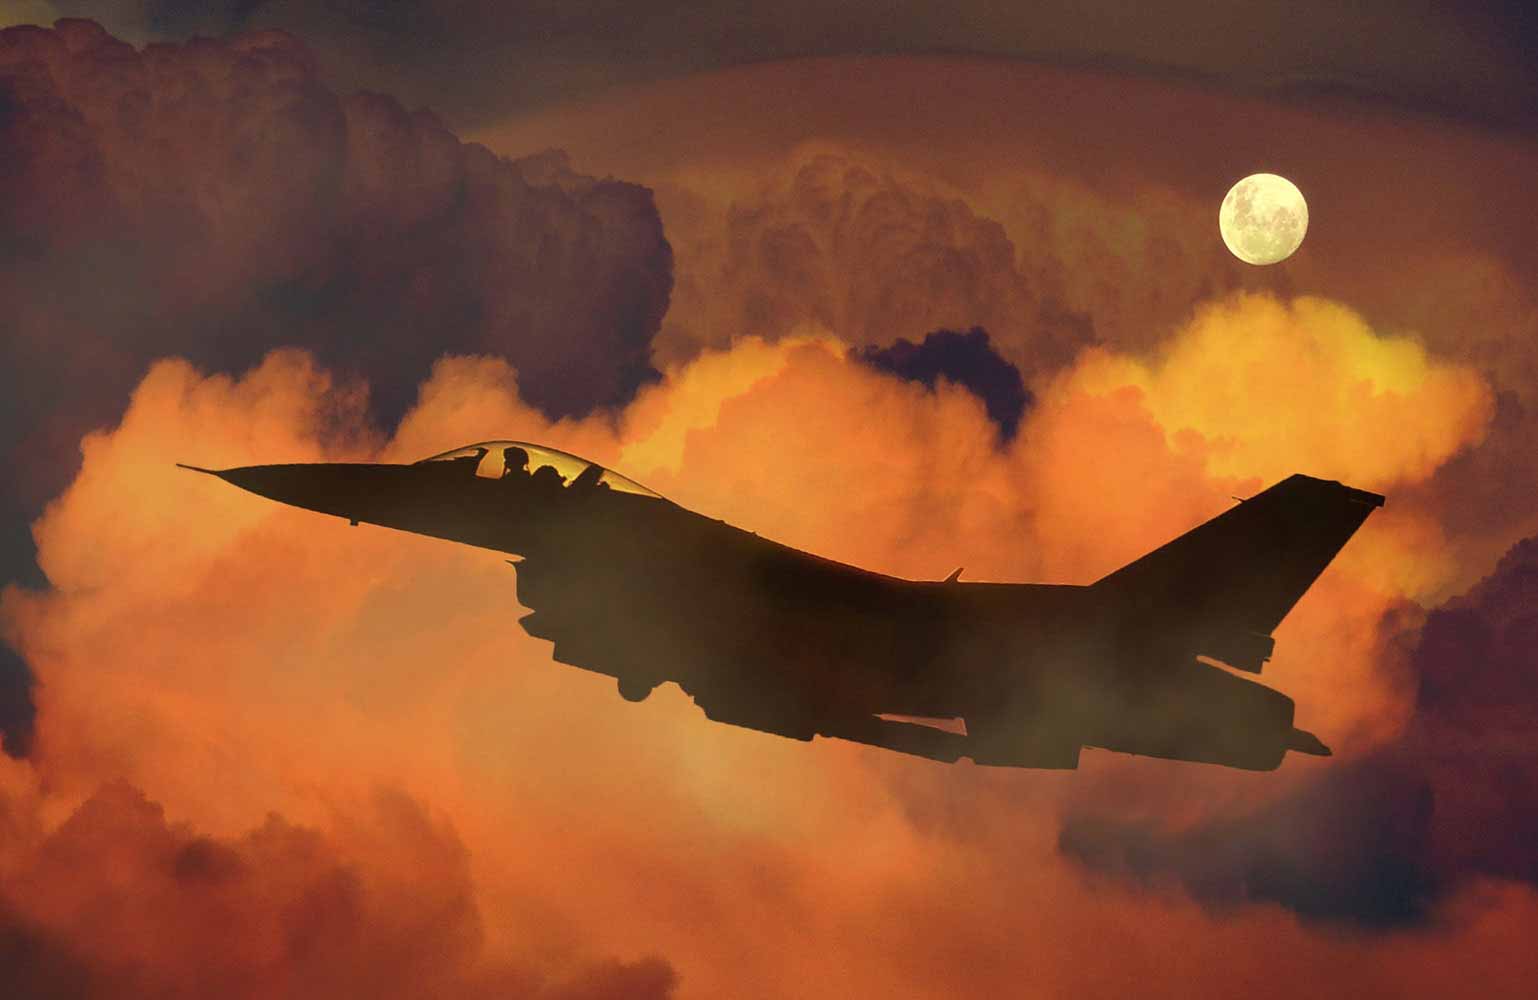 Jet fighter - On sunset